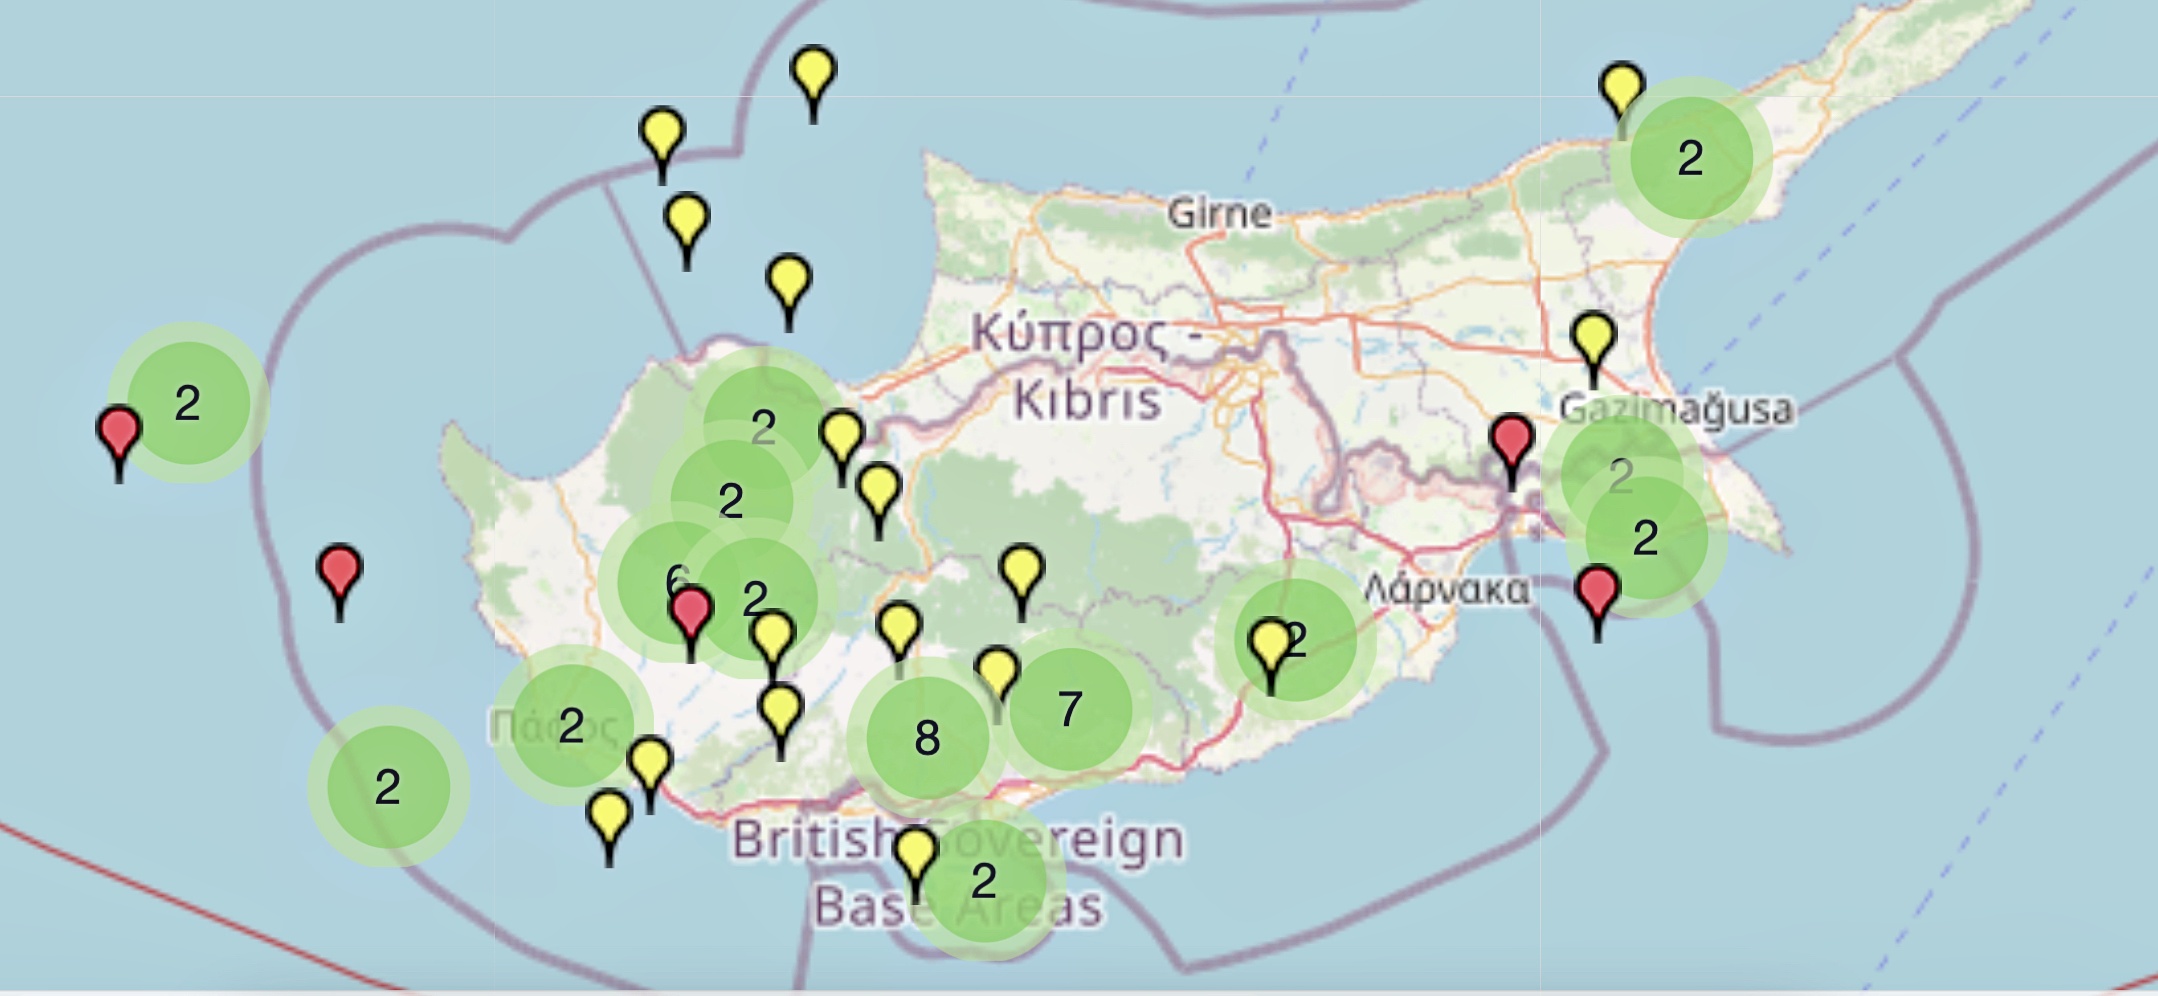 Eathquake map of Cyprus - Alliance-Estate